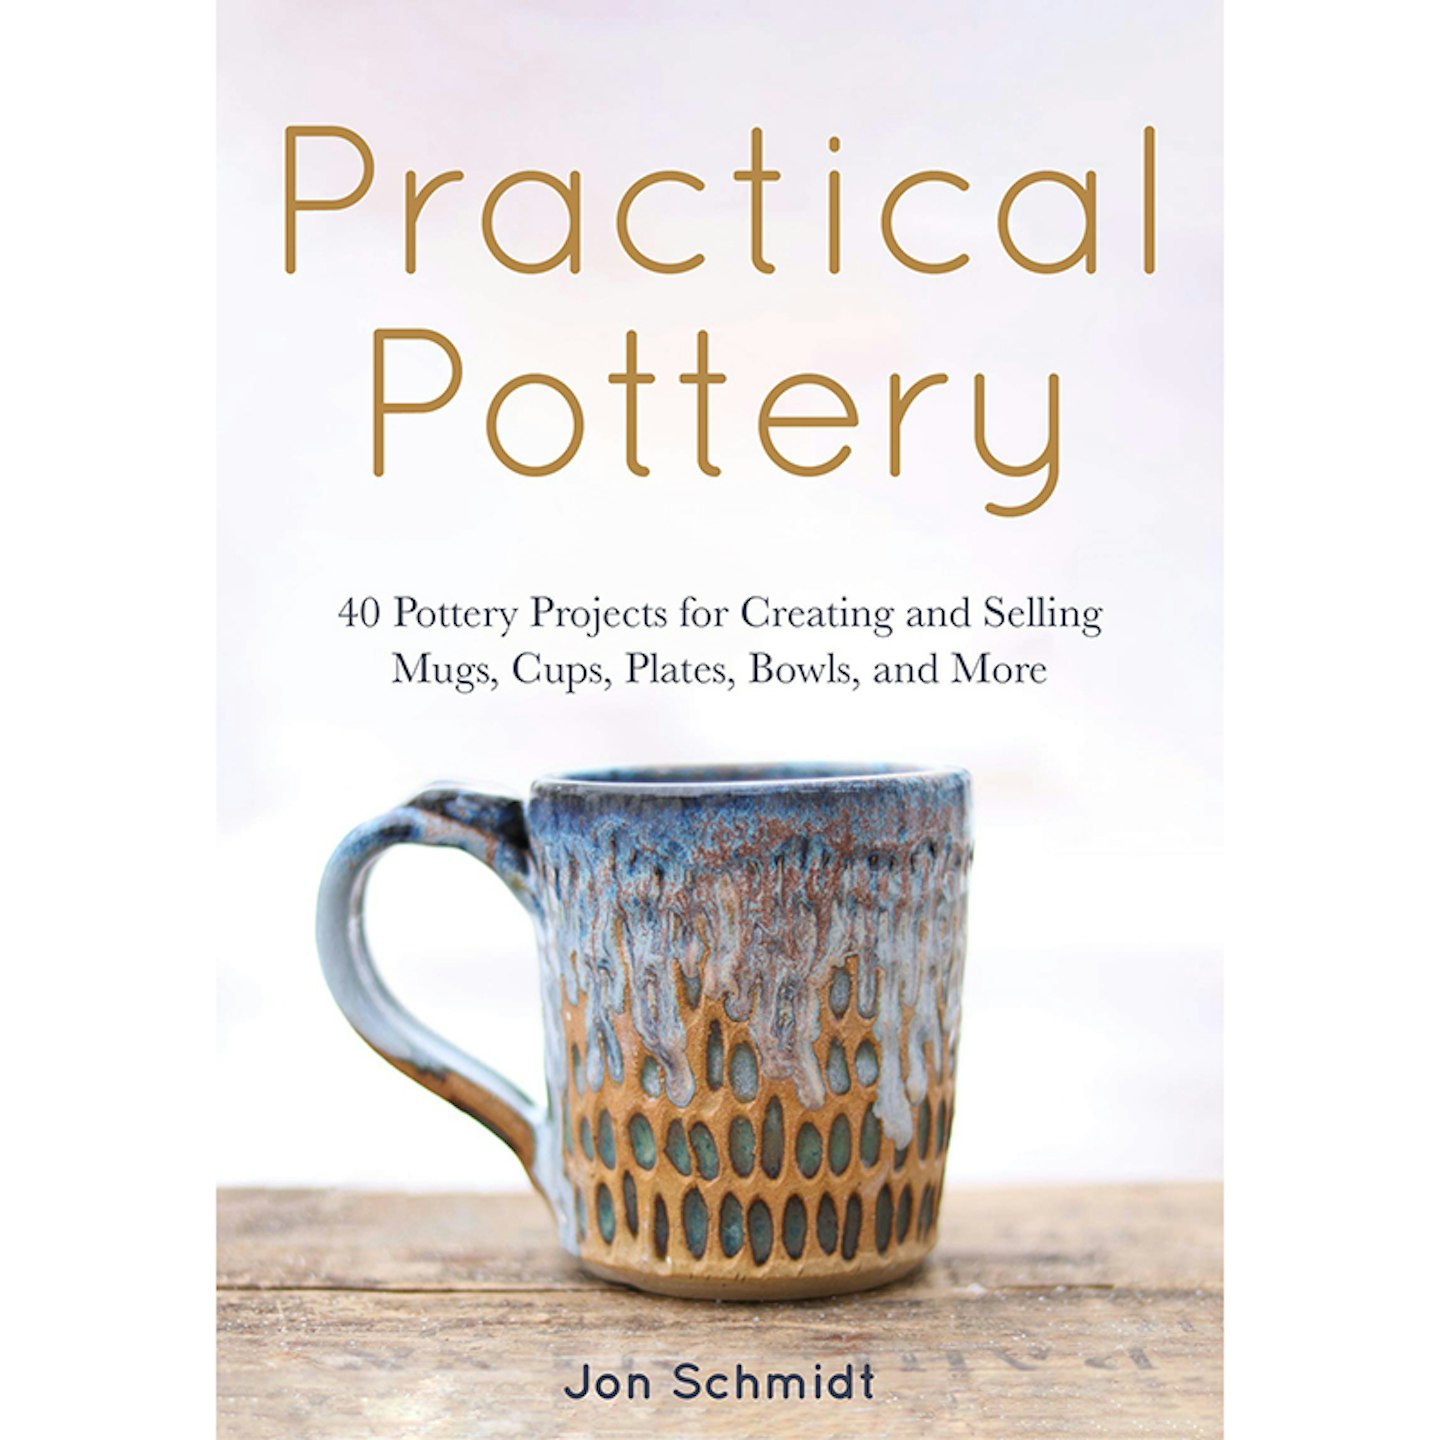 Practical Pottery by Jon Schmidt